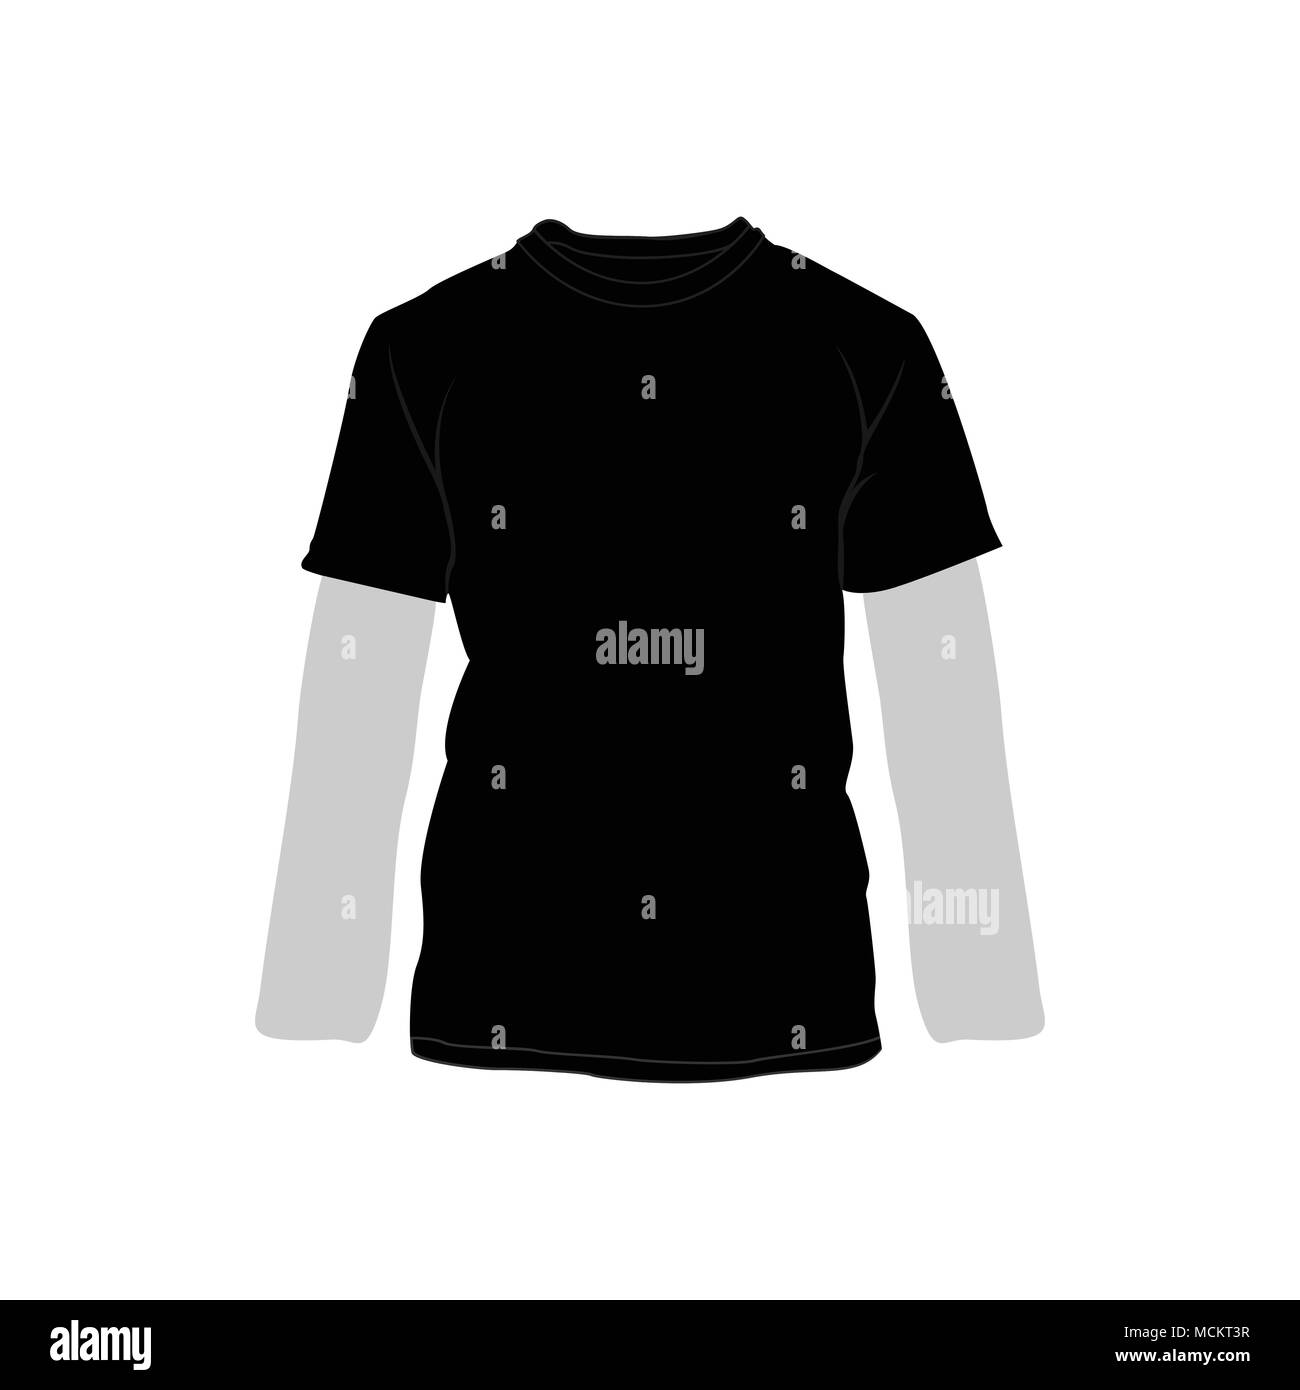 Long Sleeve Shirt Black and White Stock Photos & Images - Alamy